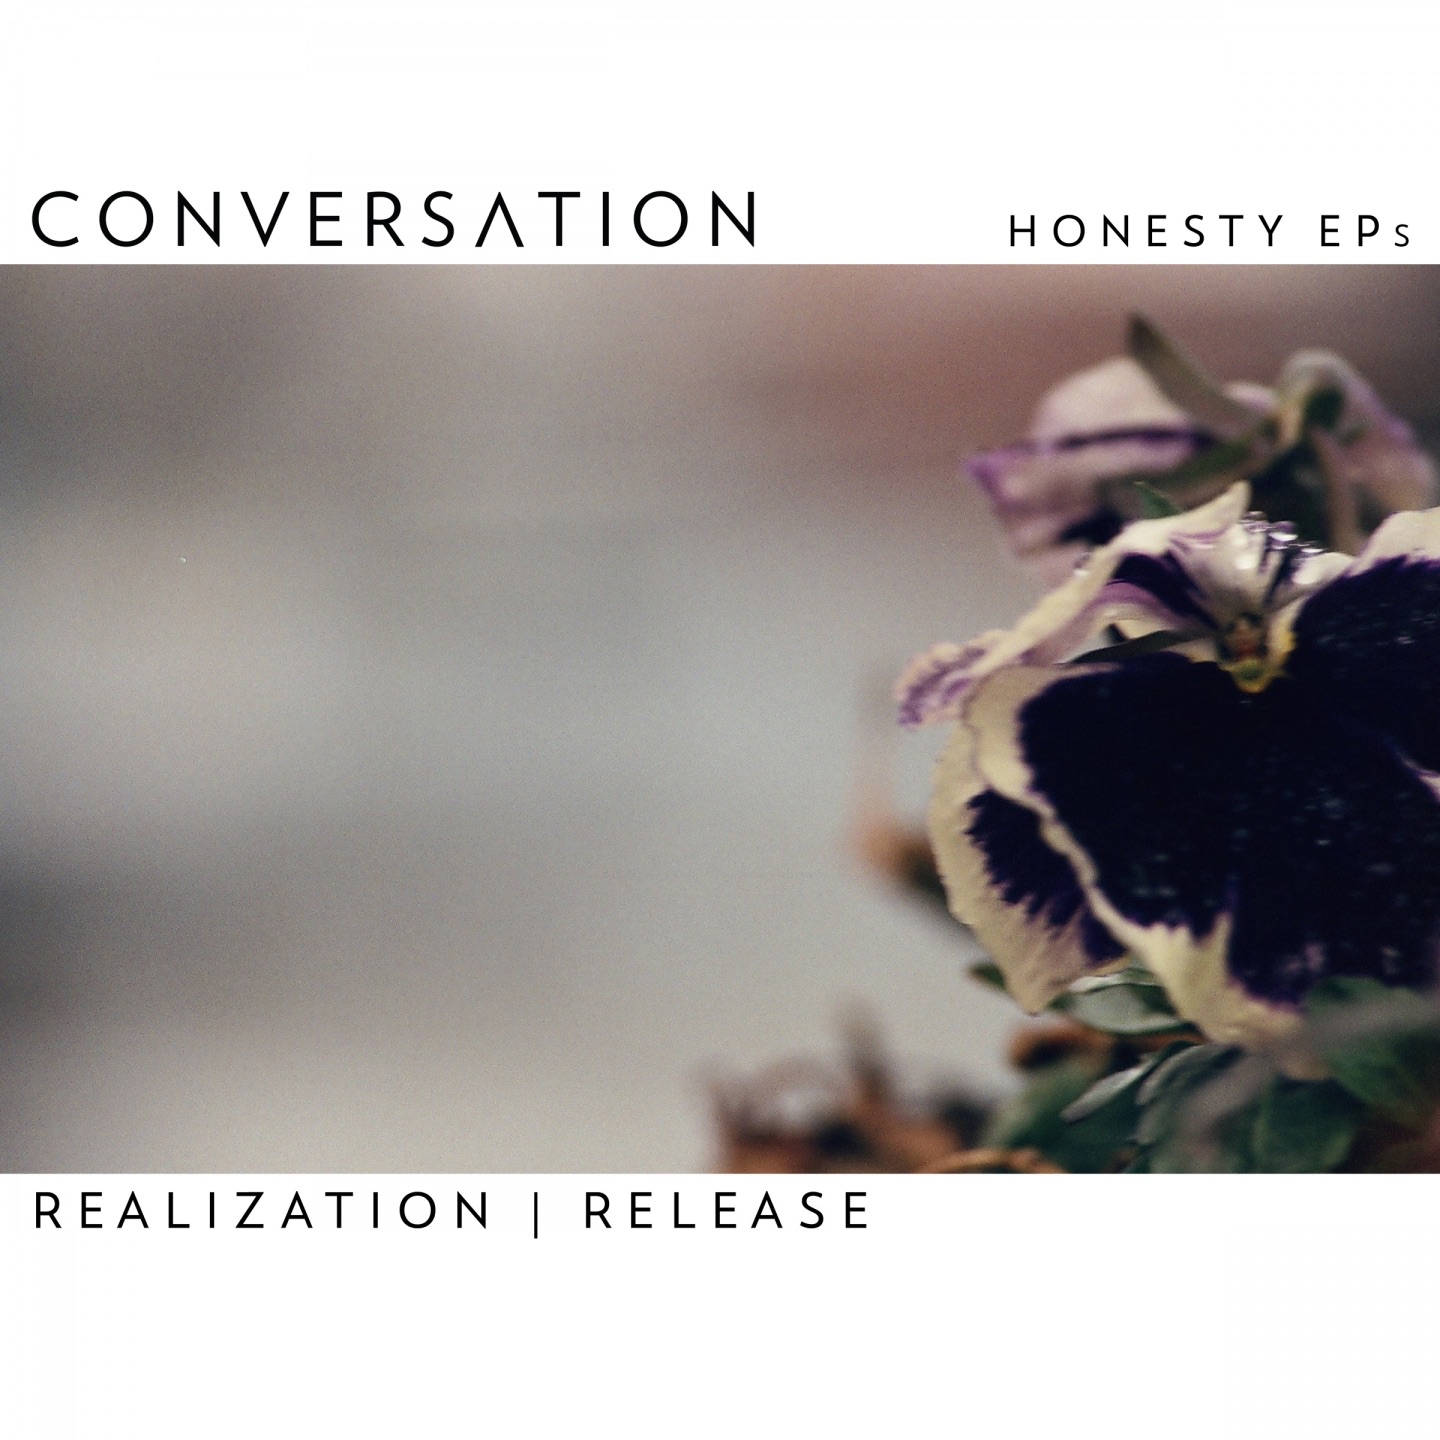 Honesty EPs – Realization | Release